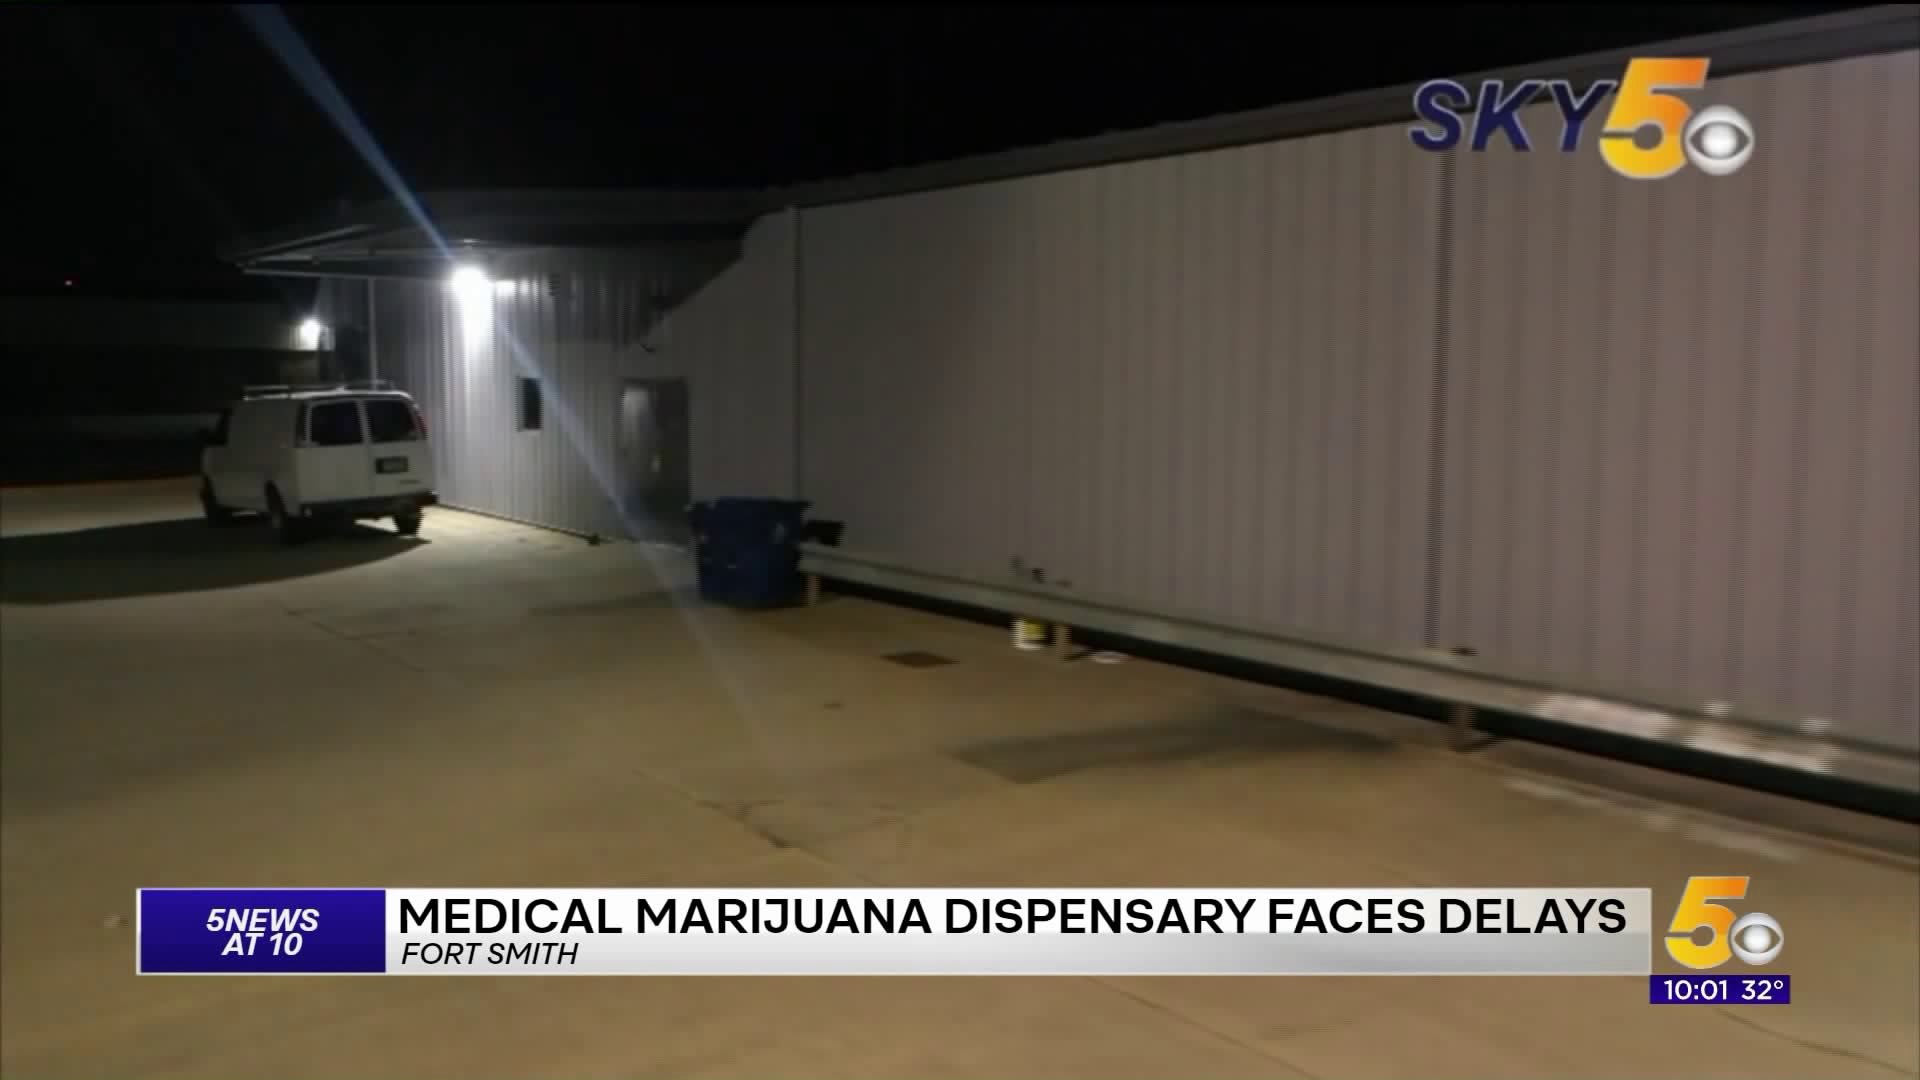 Fort Smith Medical Marijuana Dispensary Faces Delays